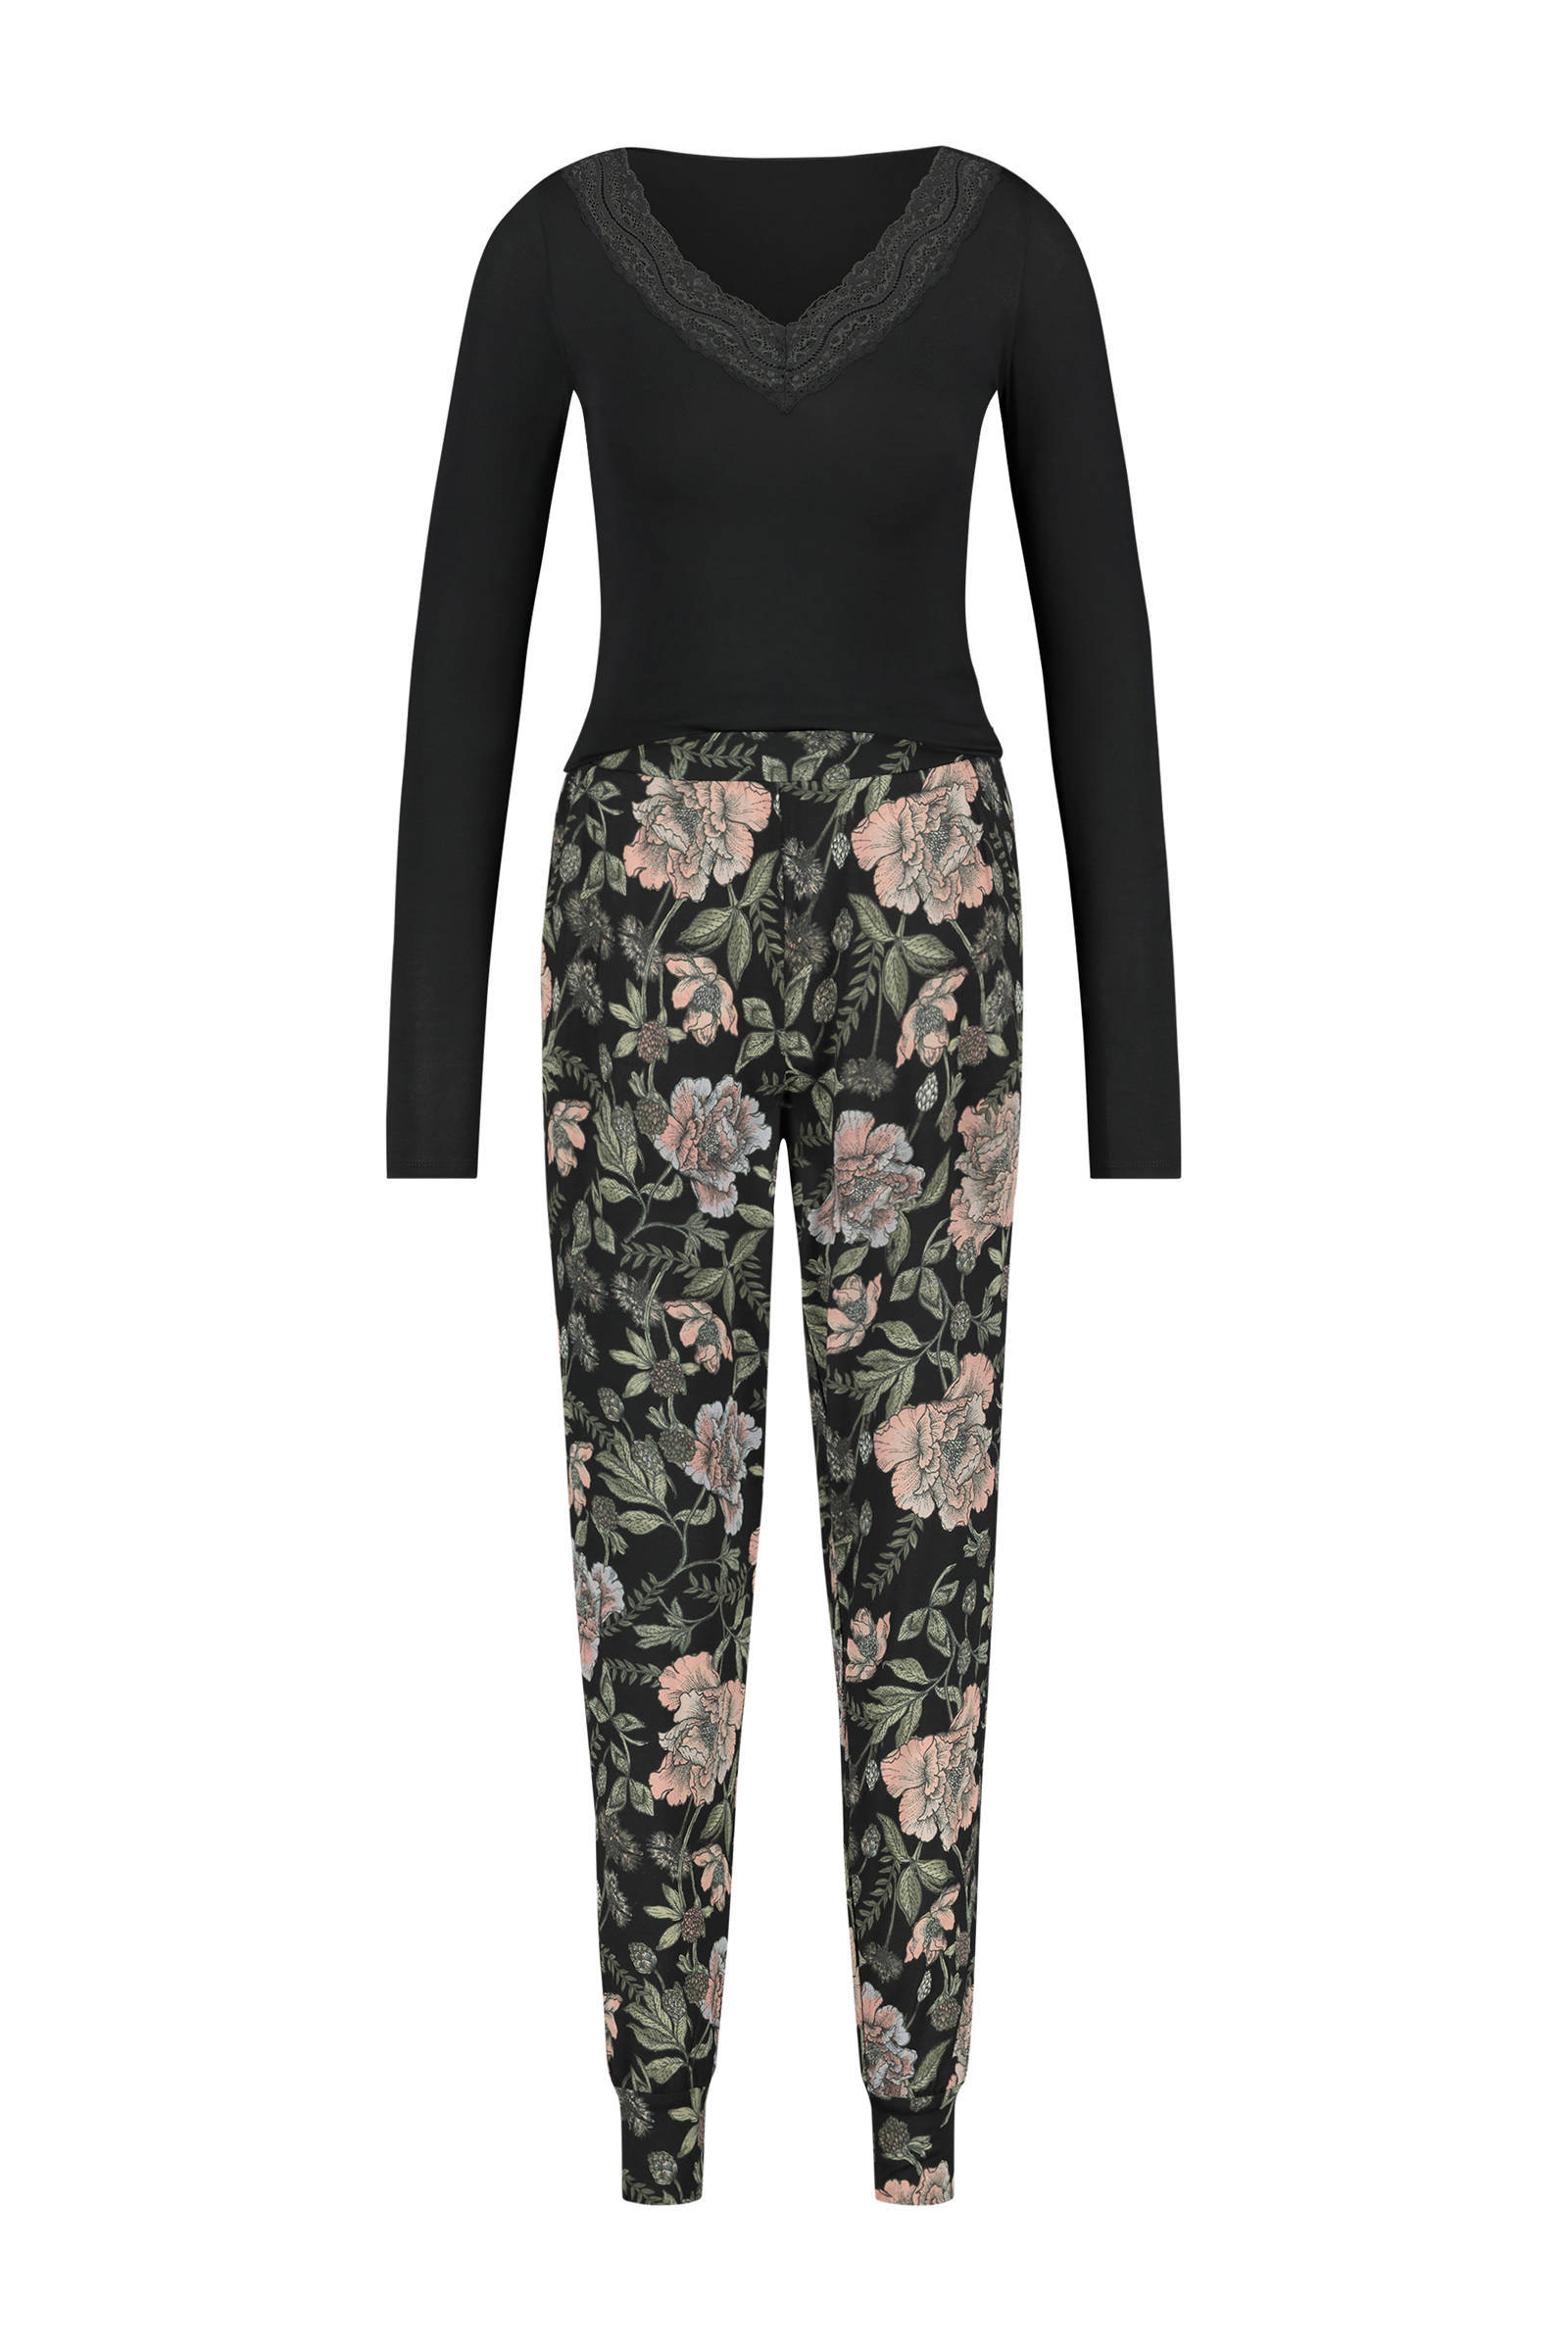 wehkamp Dames Kleding Nachtmode Pyjamas Pyjama met bloemenprint zwart/roze 